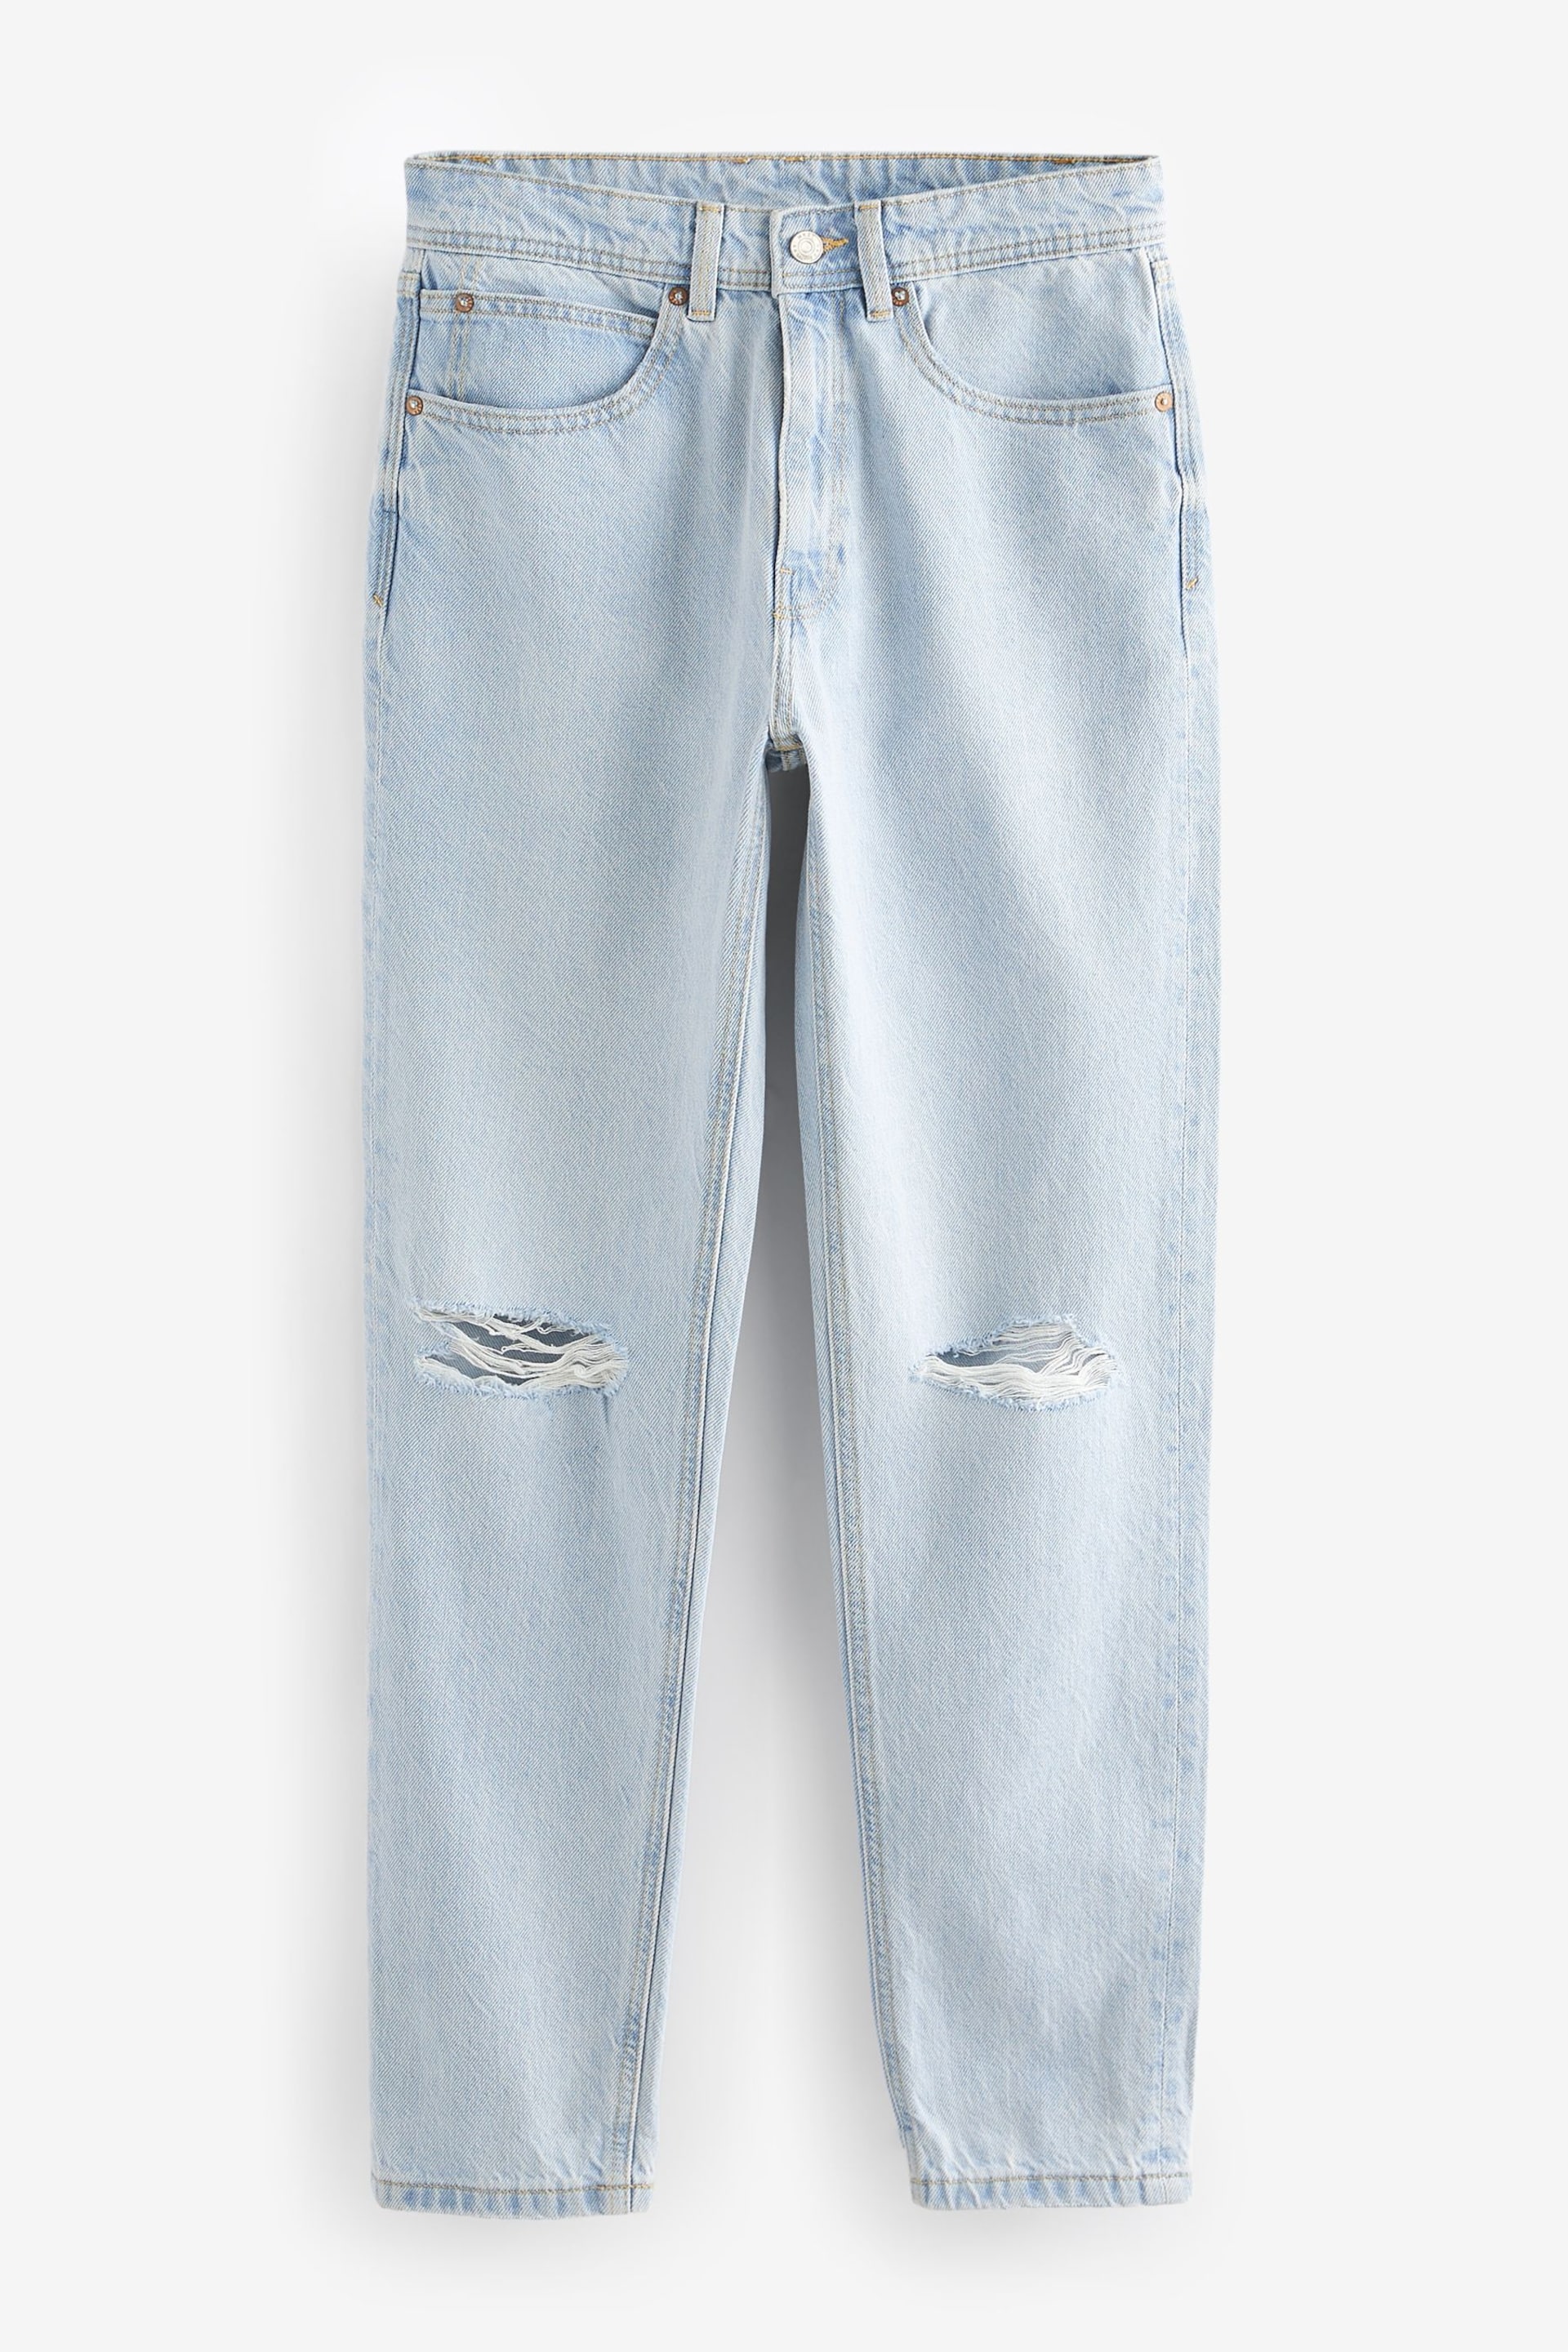 Bleach Rip Column Jeans - Image 5 of 6